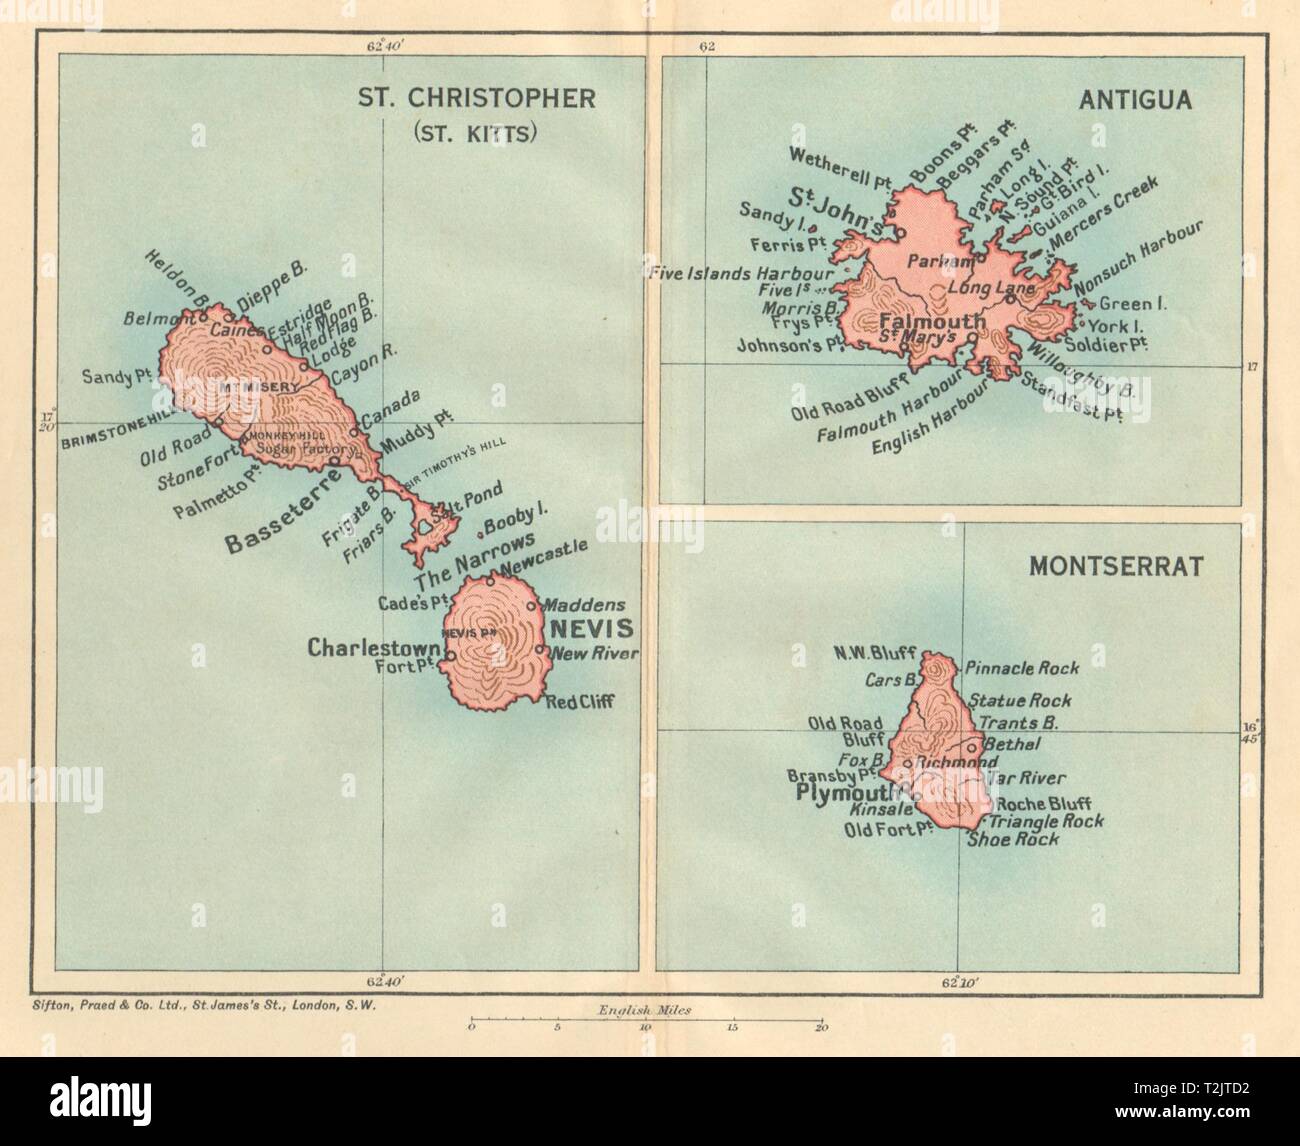 ST CHRISTOPHER (ST KITTS), ANTIGUA & MONTSERRAT. West Indies Caribbean 1935 map Stock Photo